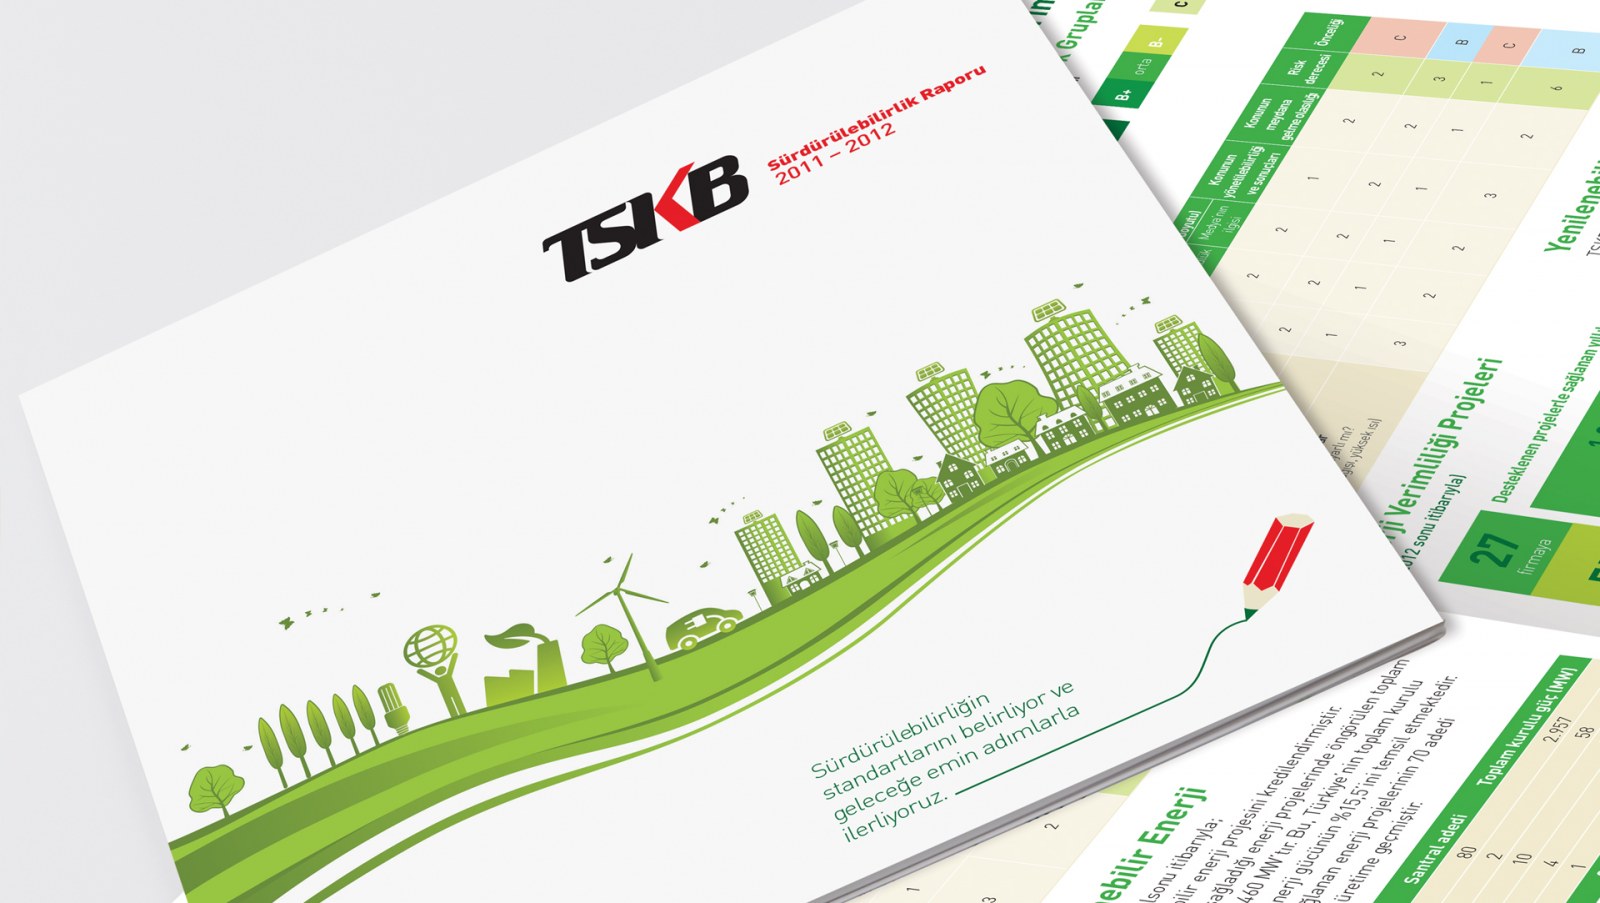 TSKB / 2011-2012 Sürdürülebilirlik Raporu / 2011-2012 Sustainability Report